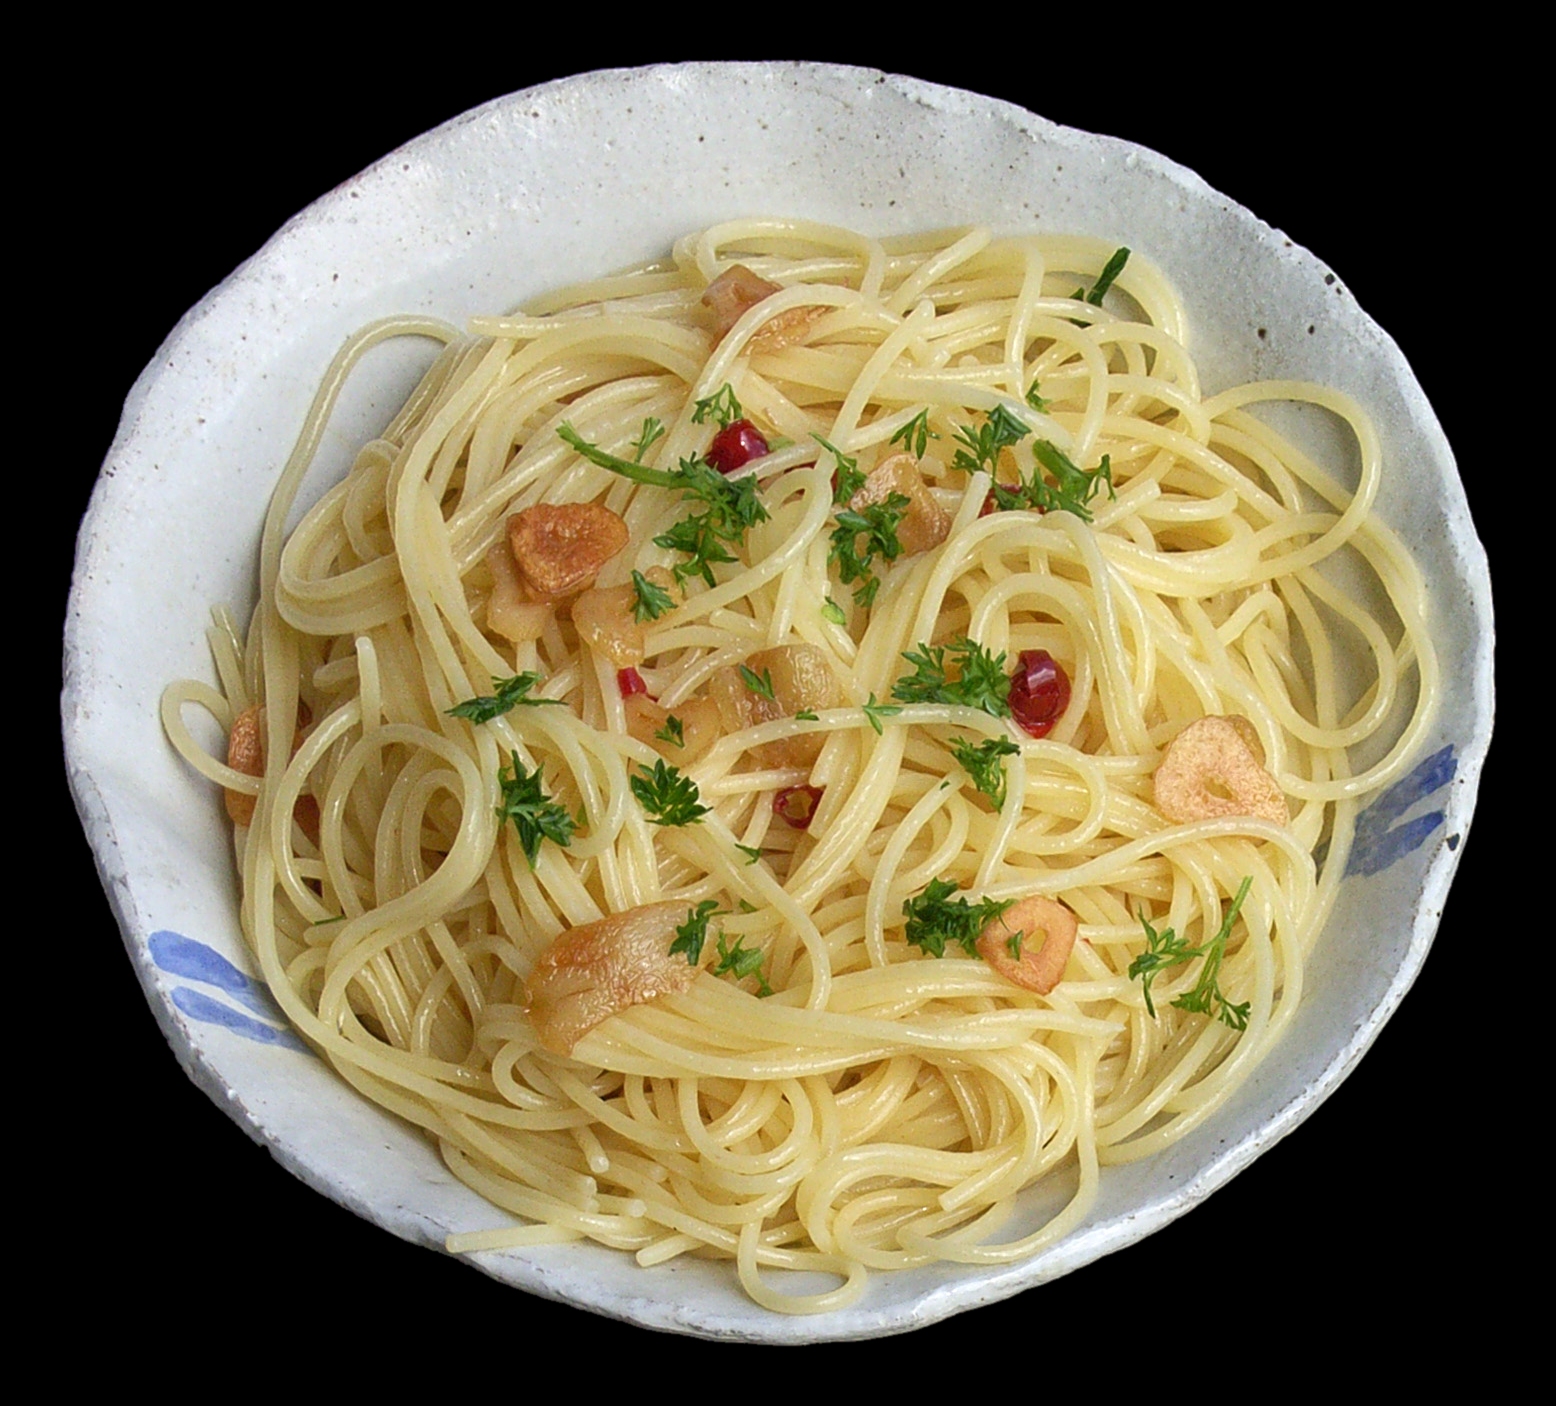 Spaghetti al peperoncino